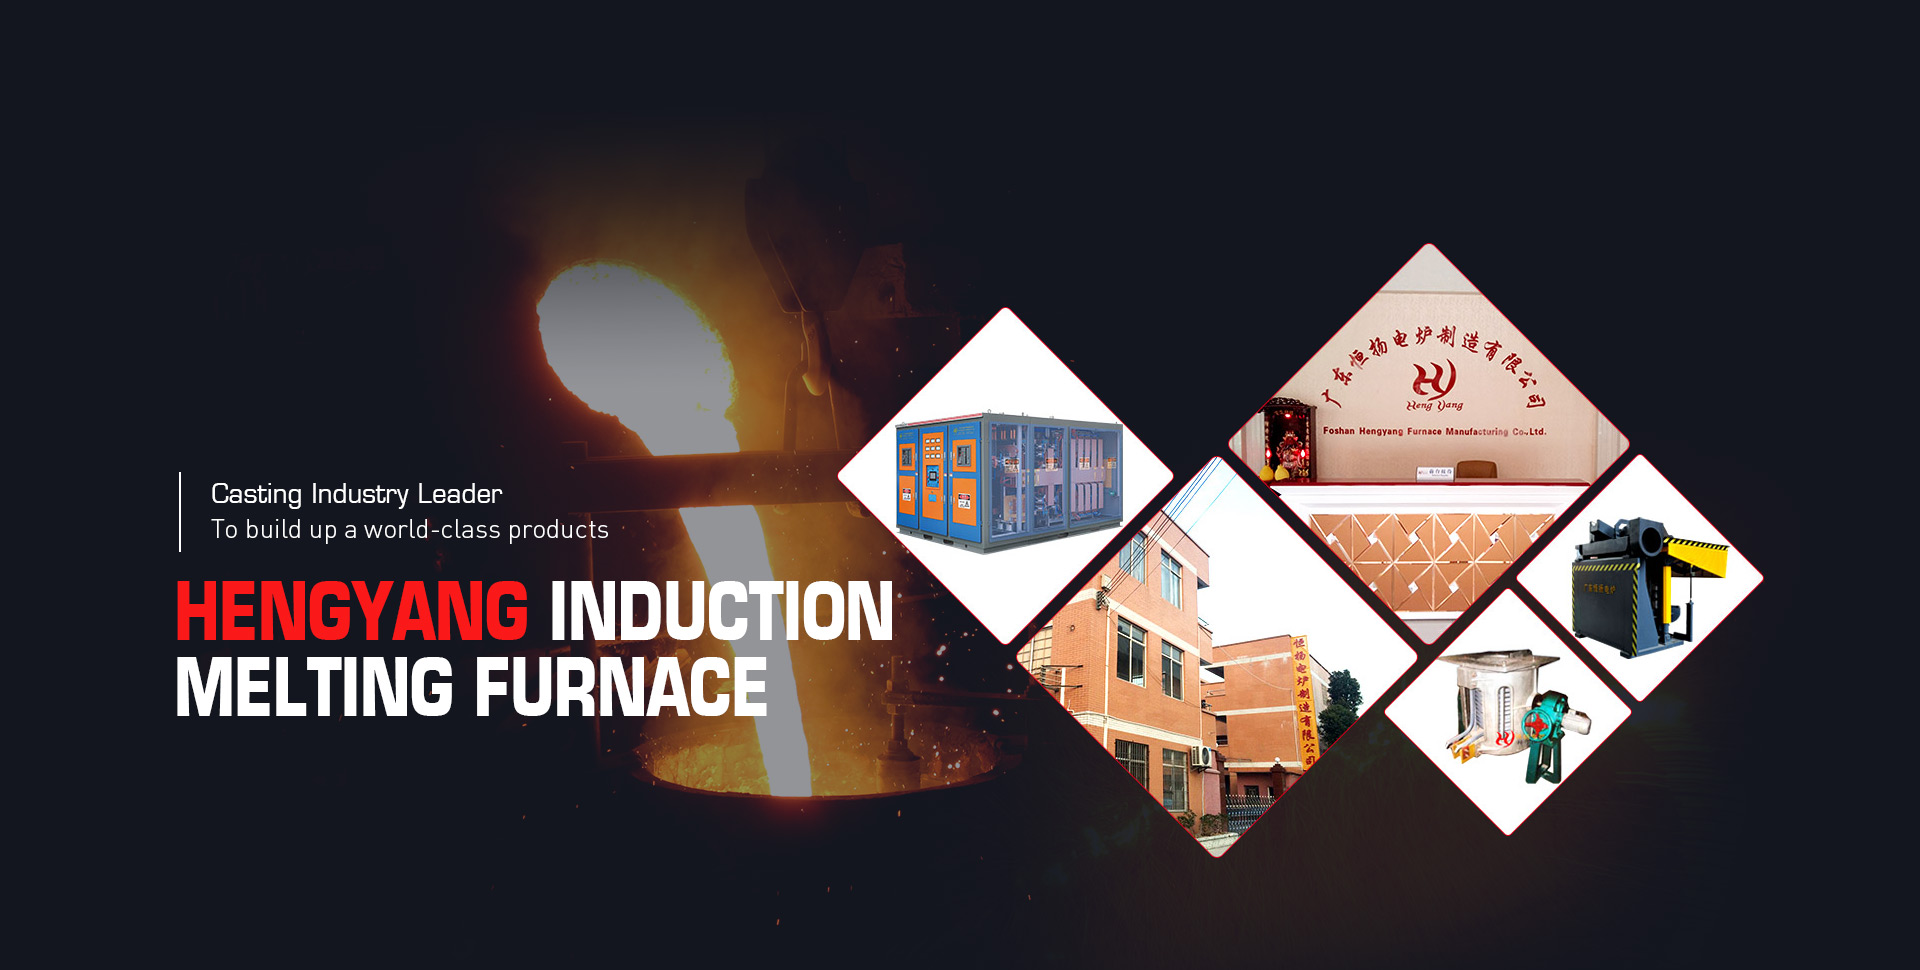 Professional induction furnace manufacturer